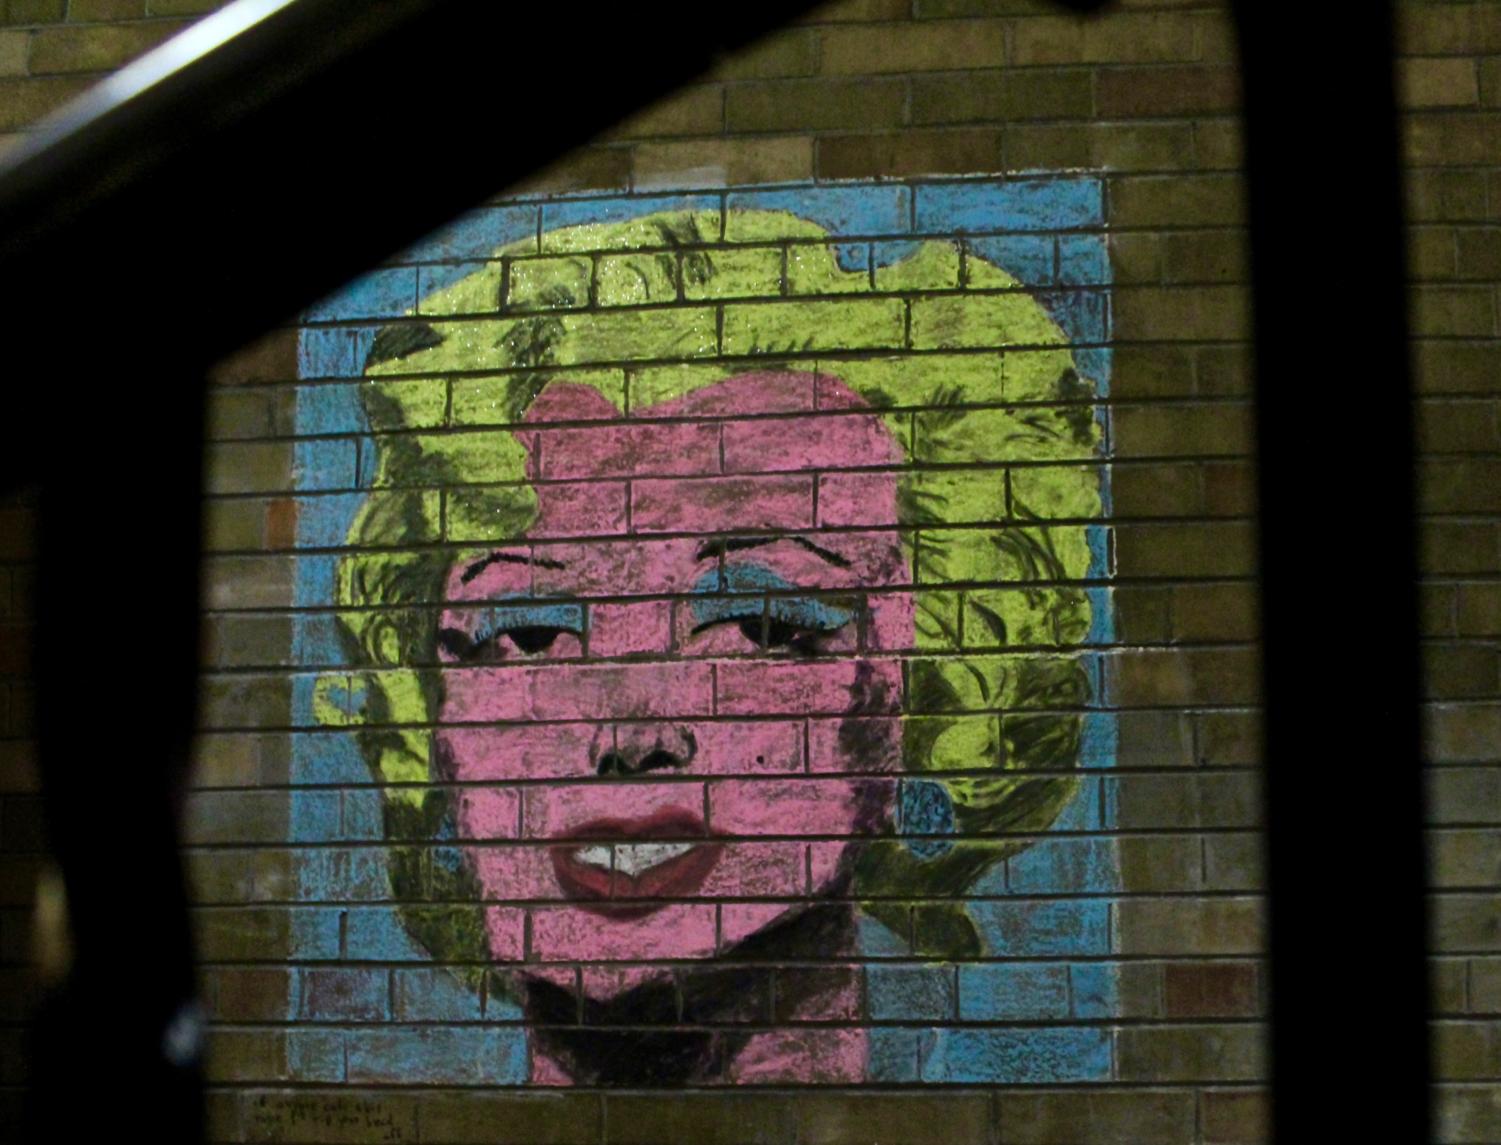 Rachel Hildebrand recreated Andy Warhol’s clasic “Marilyn Diptych” on the walls of Linn-Mathews.